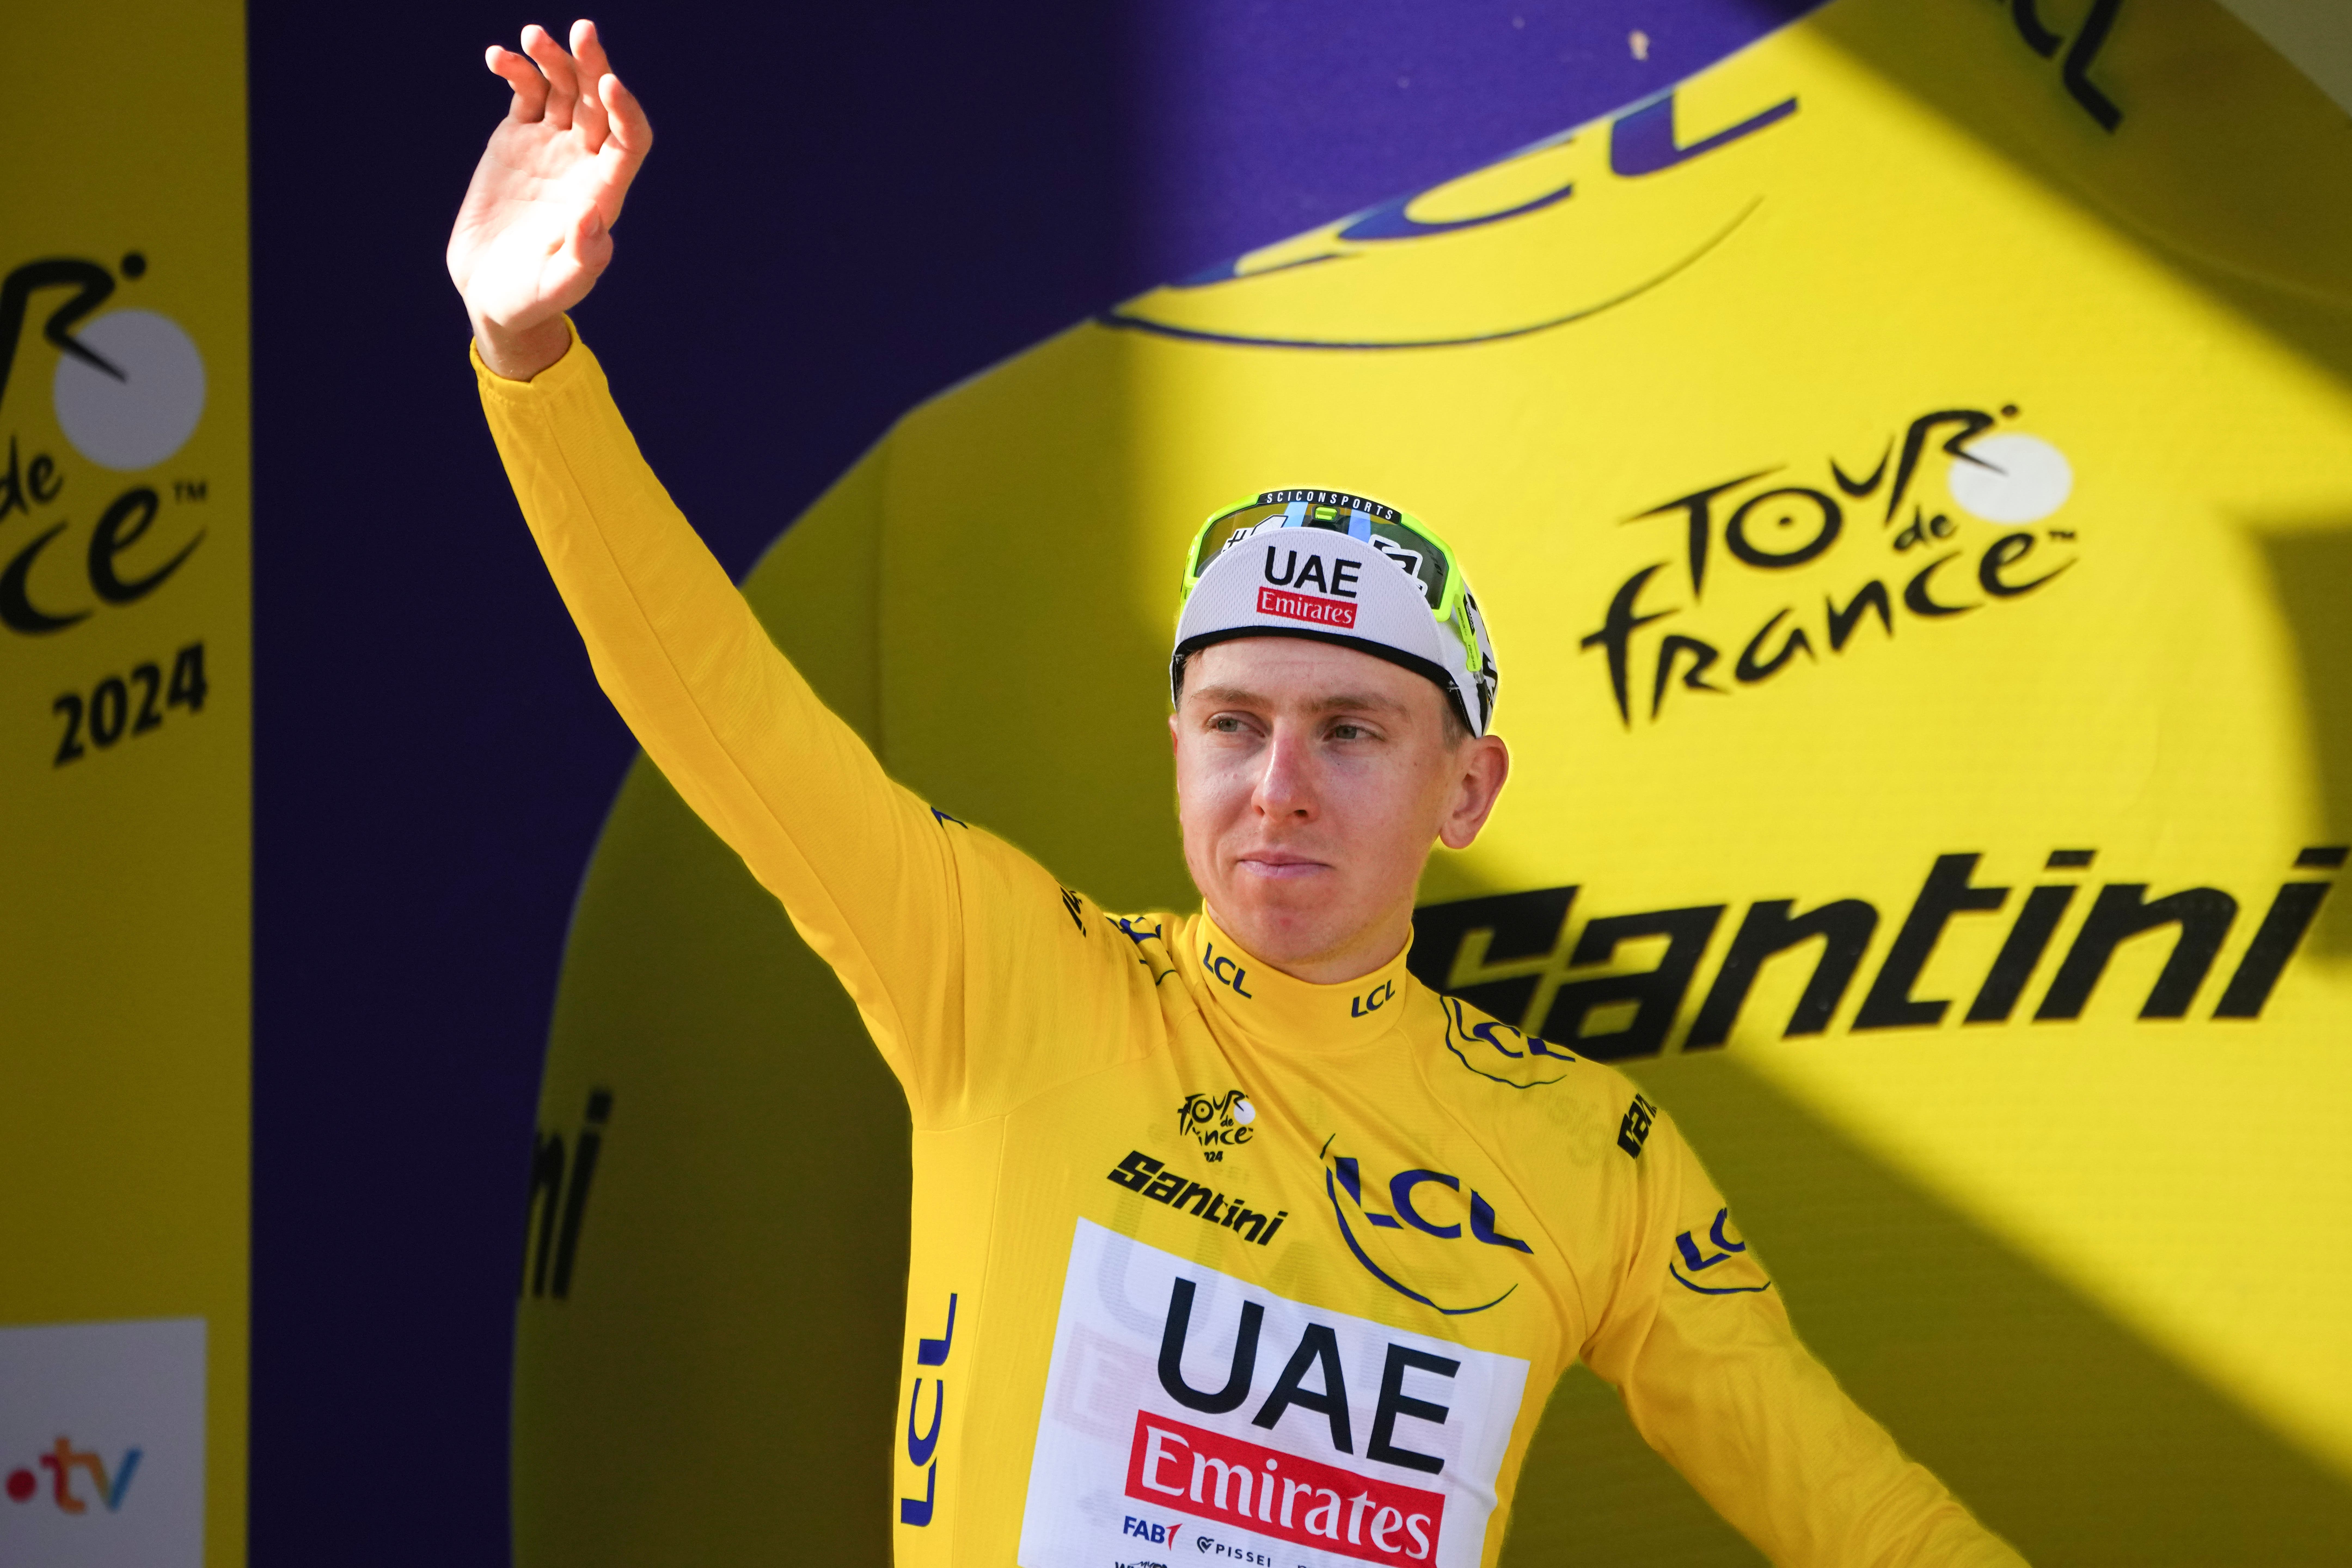 Tadej Pogacar is the new leader of the Tour de France